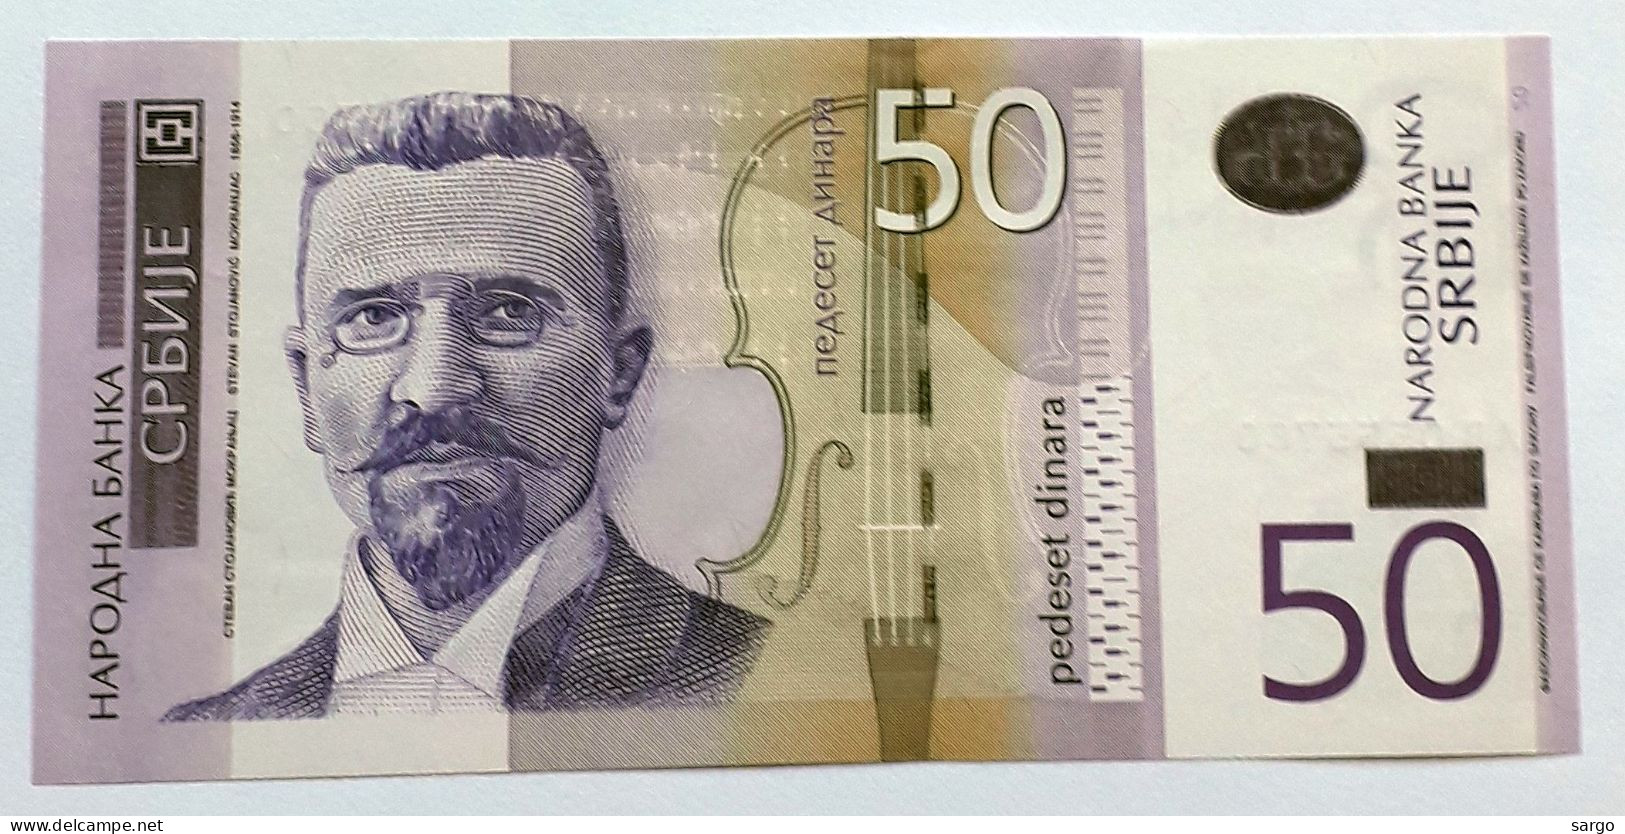 SERBIA - 50 DINARA  - P 56A  (2011)  - UNC -  BANKNOTES - PAPER MONEY - CARTAMONETA - - Serbien